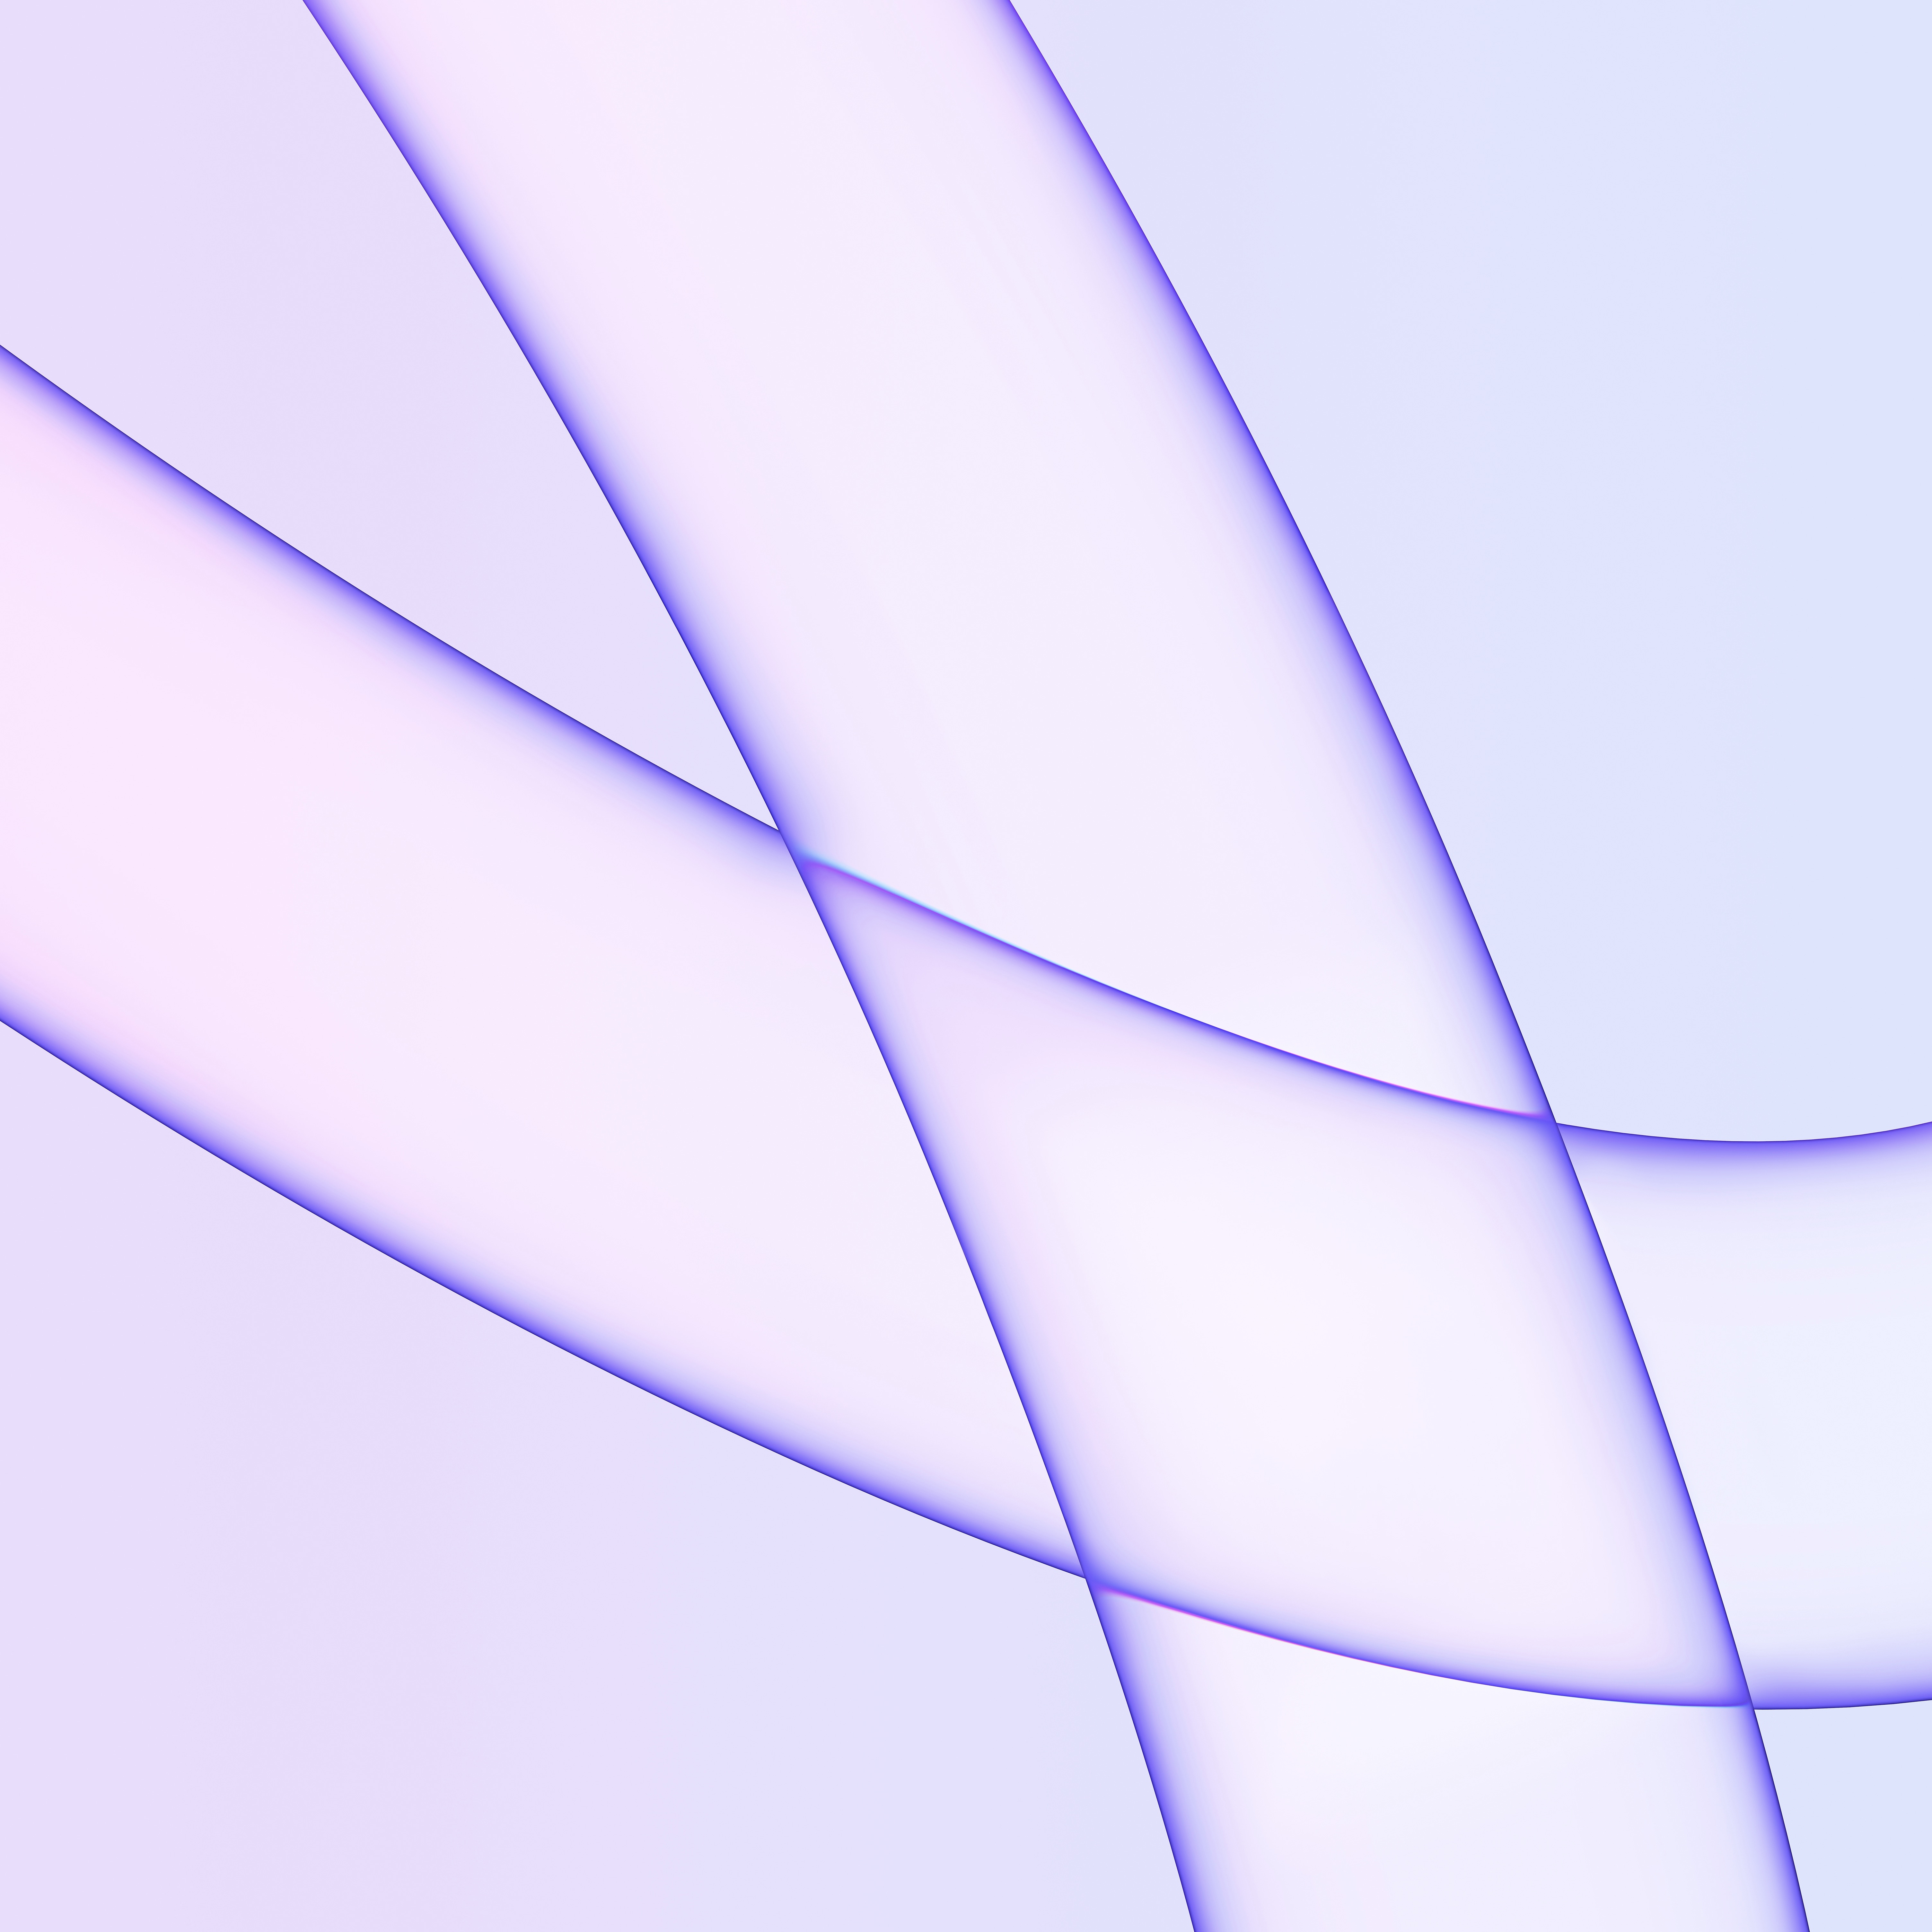 2021 iMac color matching wallpaper idownloadblog (Purple Light) @AR72014